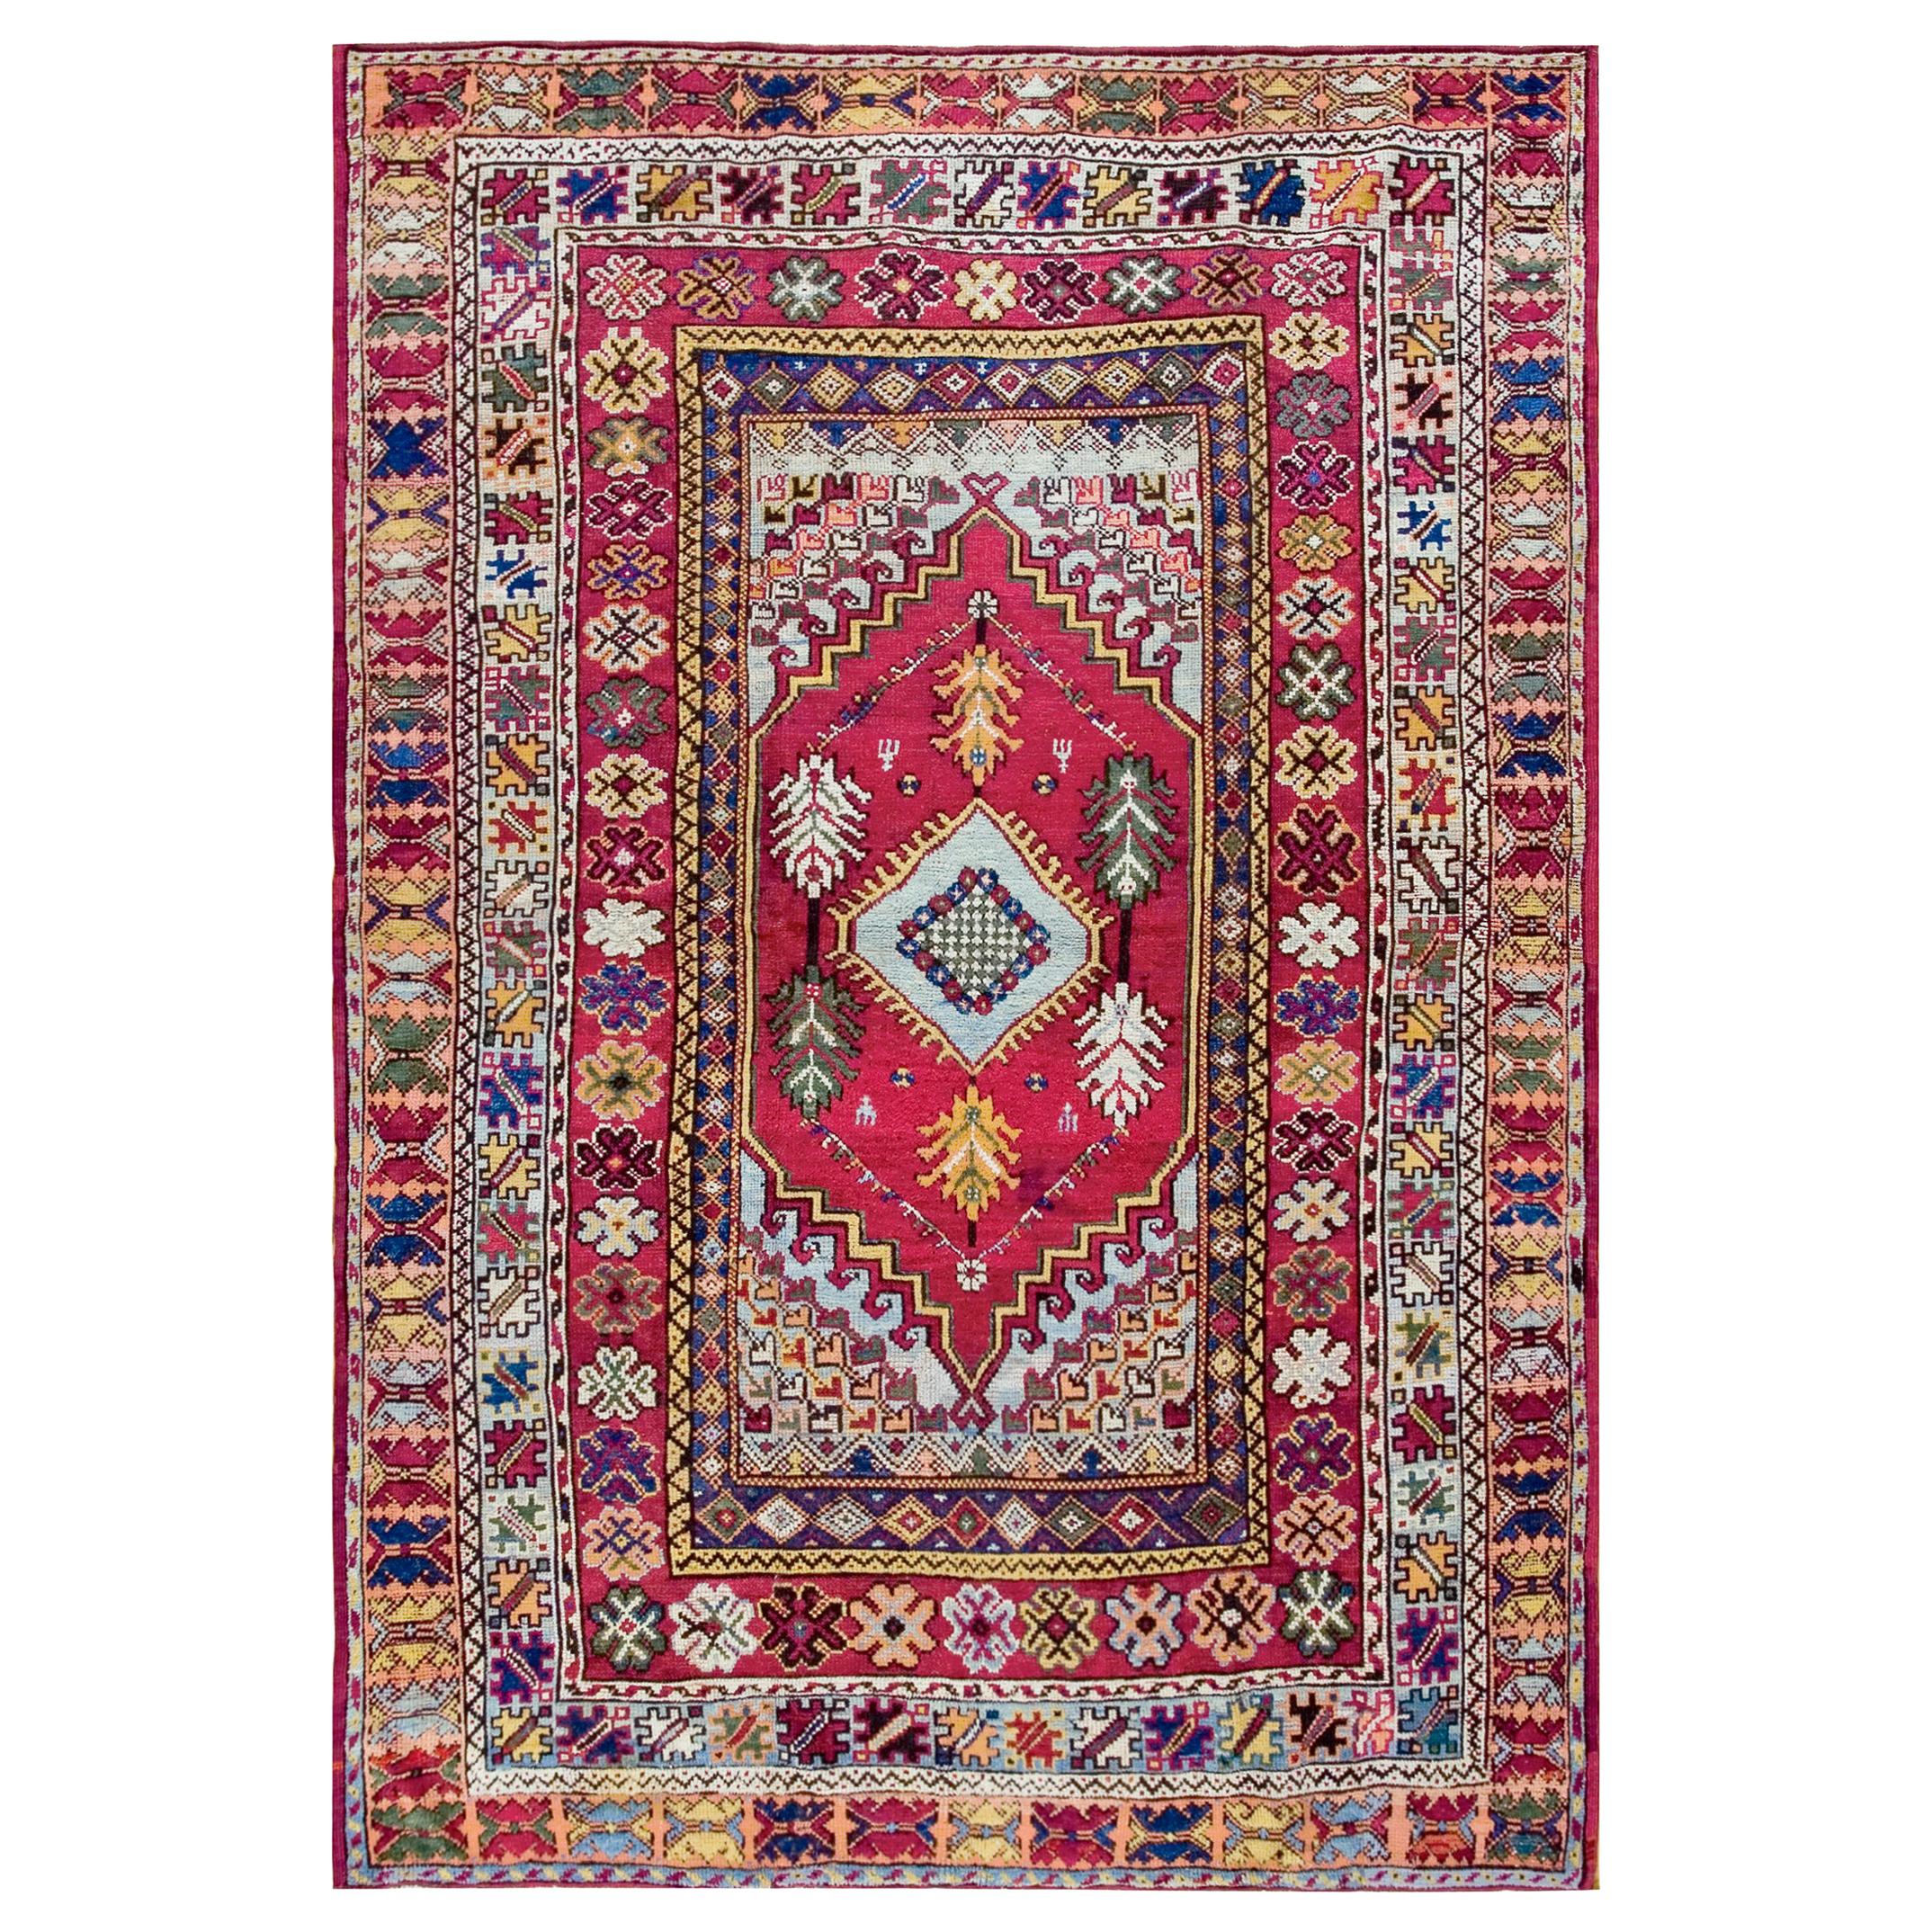 Late 19th Century Moroccan Rabat Carpet ( 6'8" x 9'6" - 203 x 290 ) For Sale